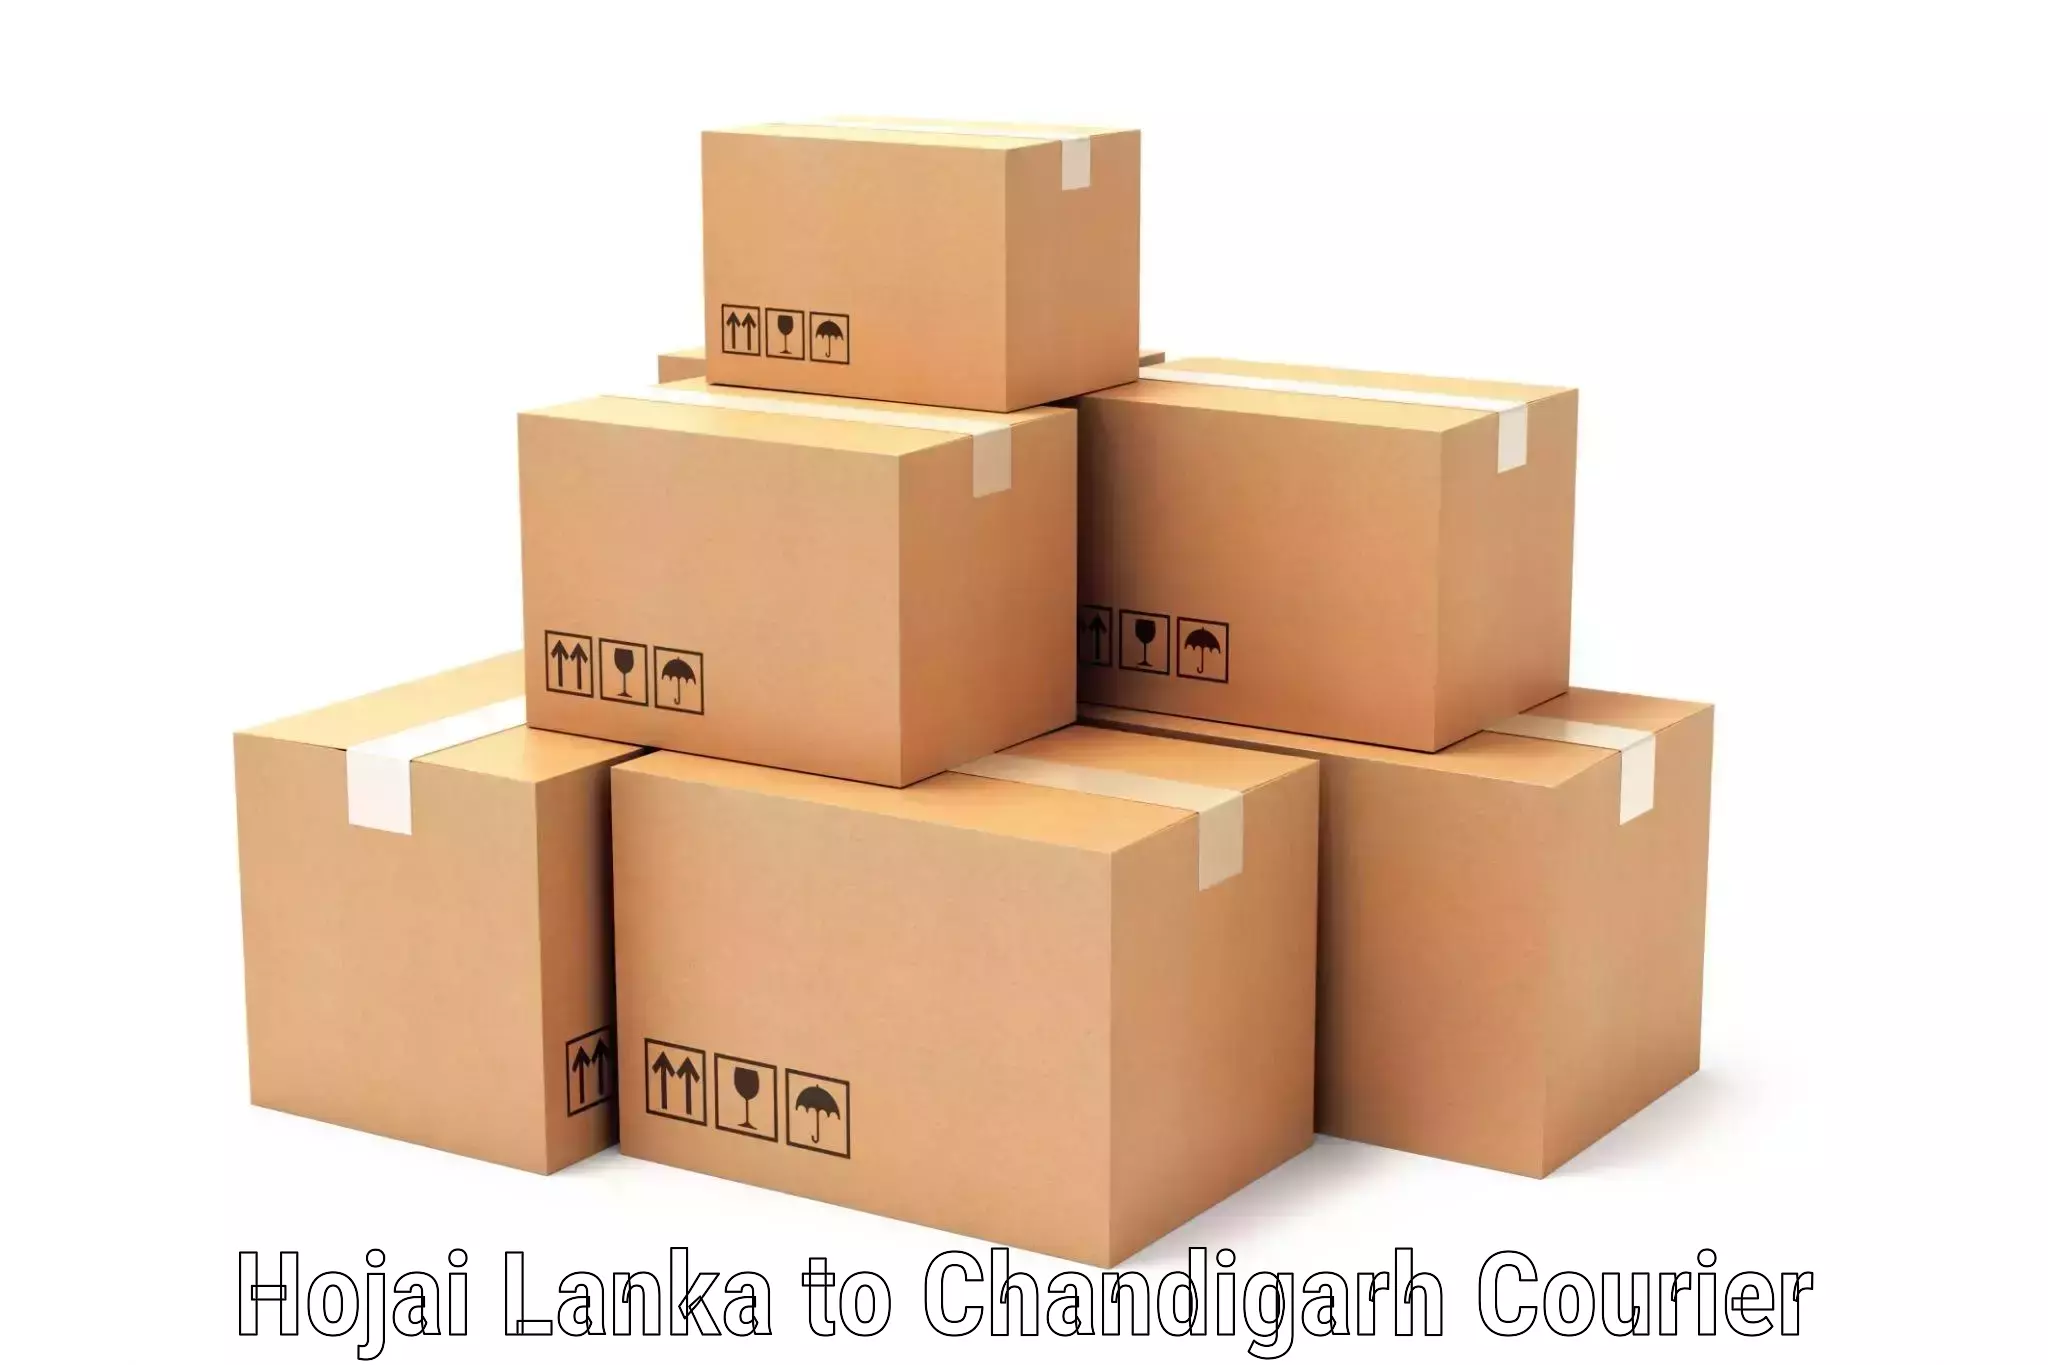 Business shipping needs Hojai Lanka to Chandigarh